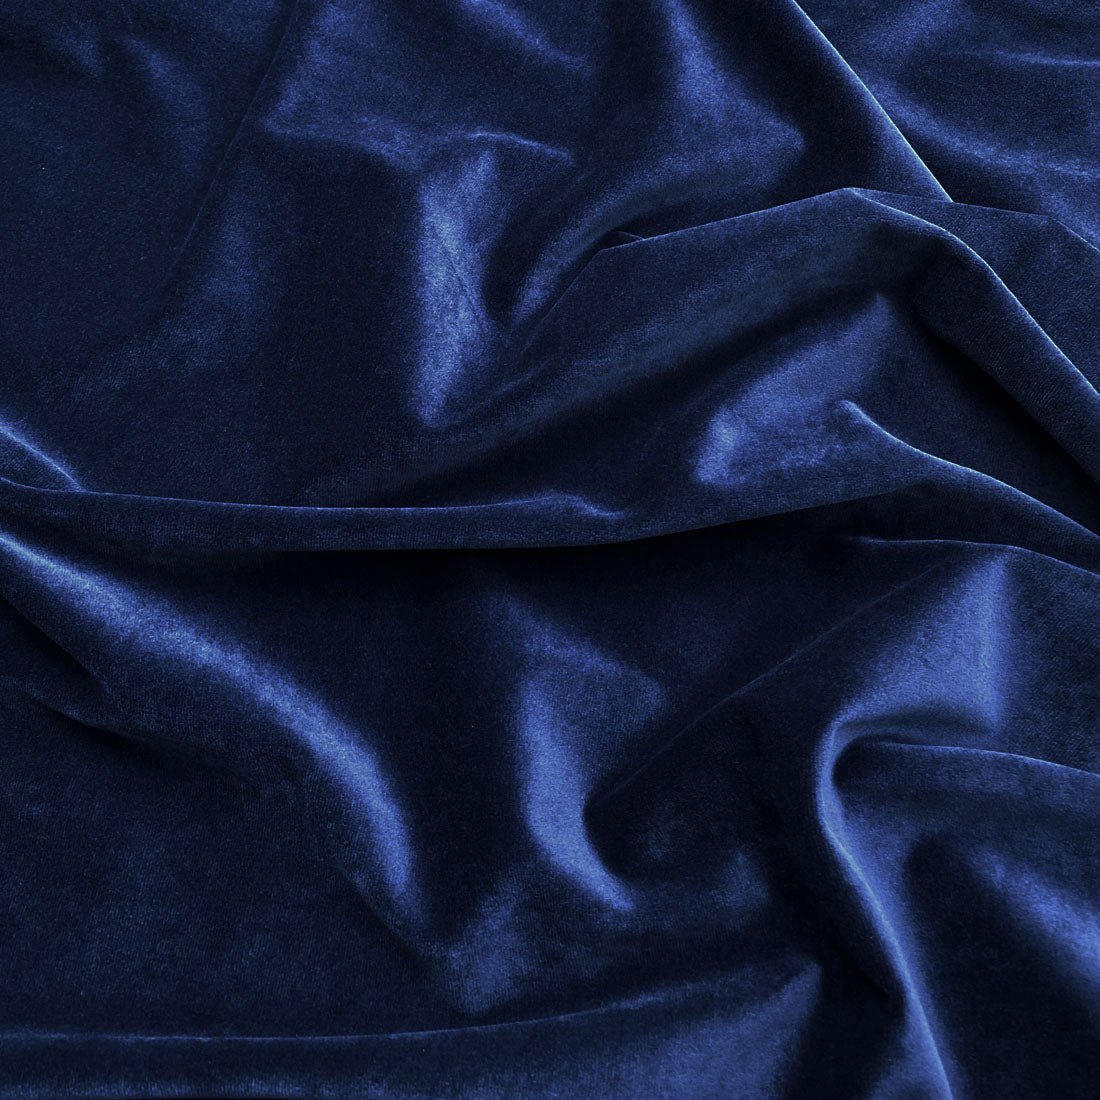 Kumaş: Kadife - Renk: Gece Mavisi - Normod